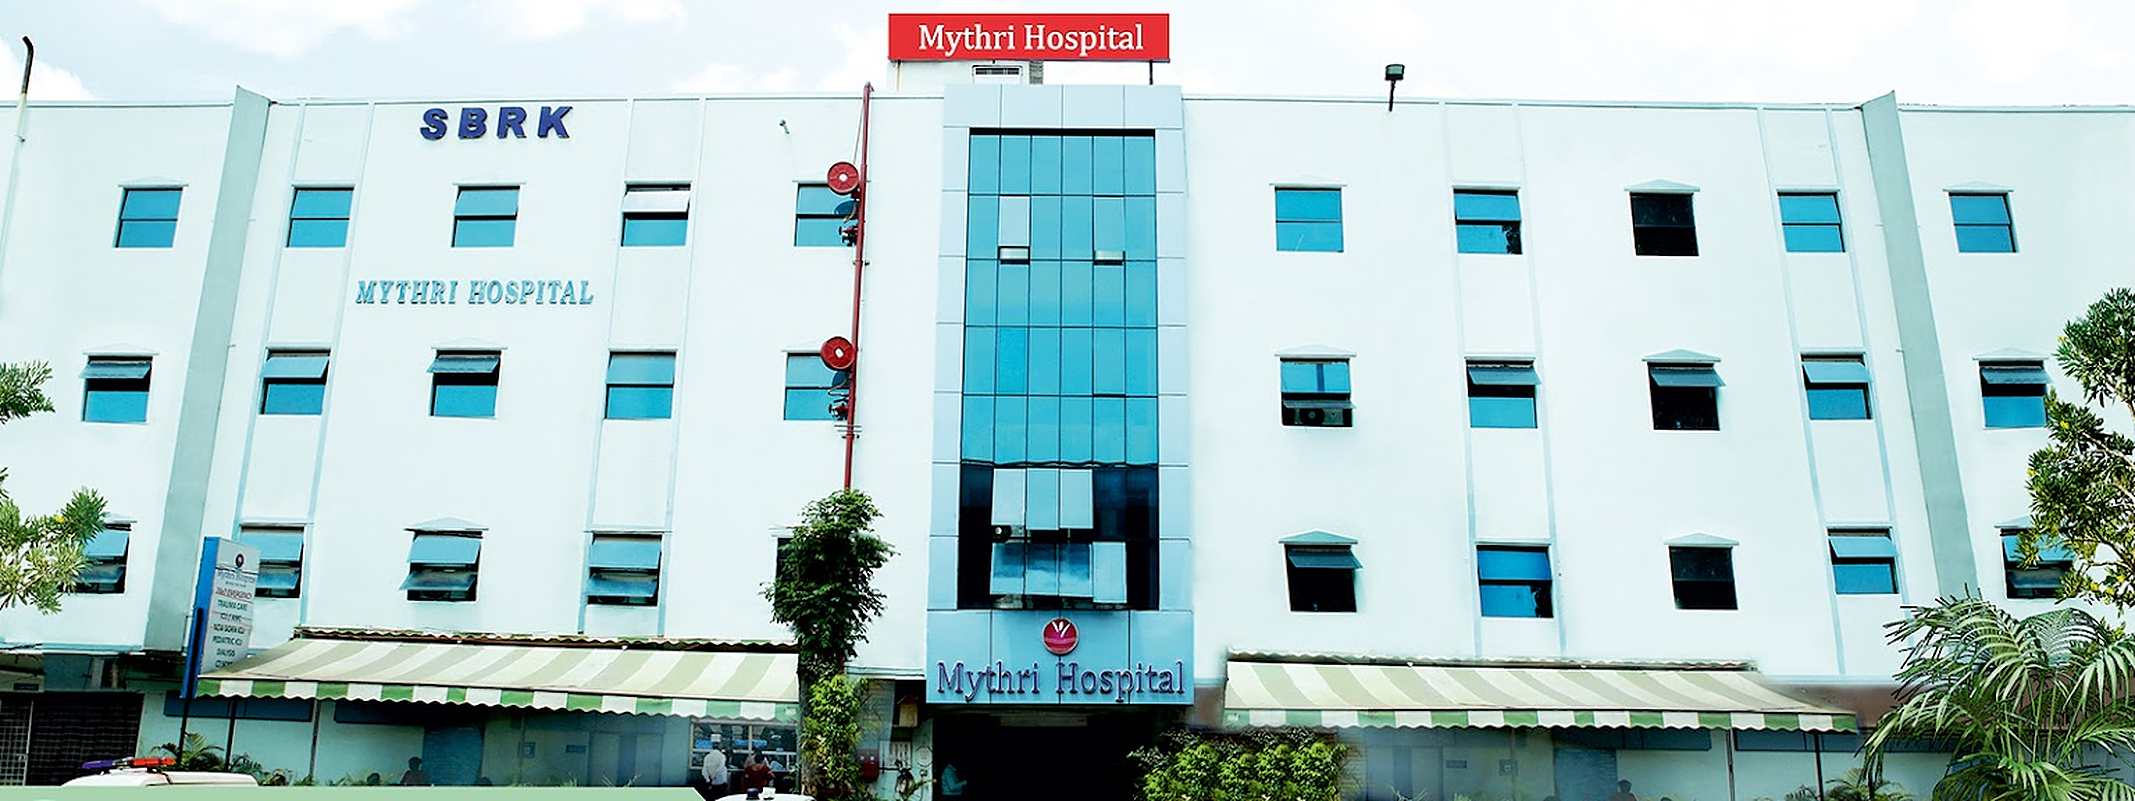 Mythri Hospital - Mehdipatnam